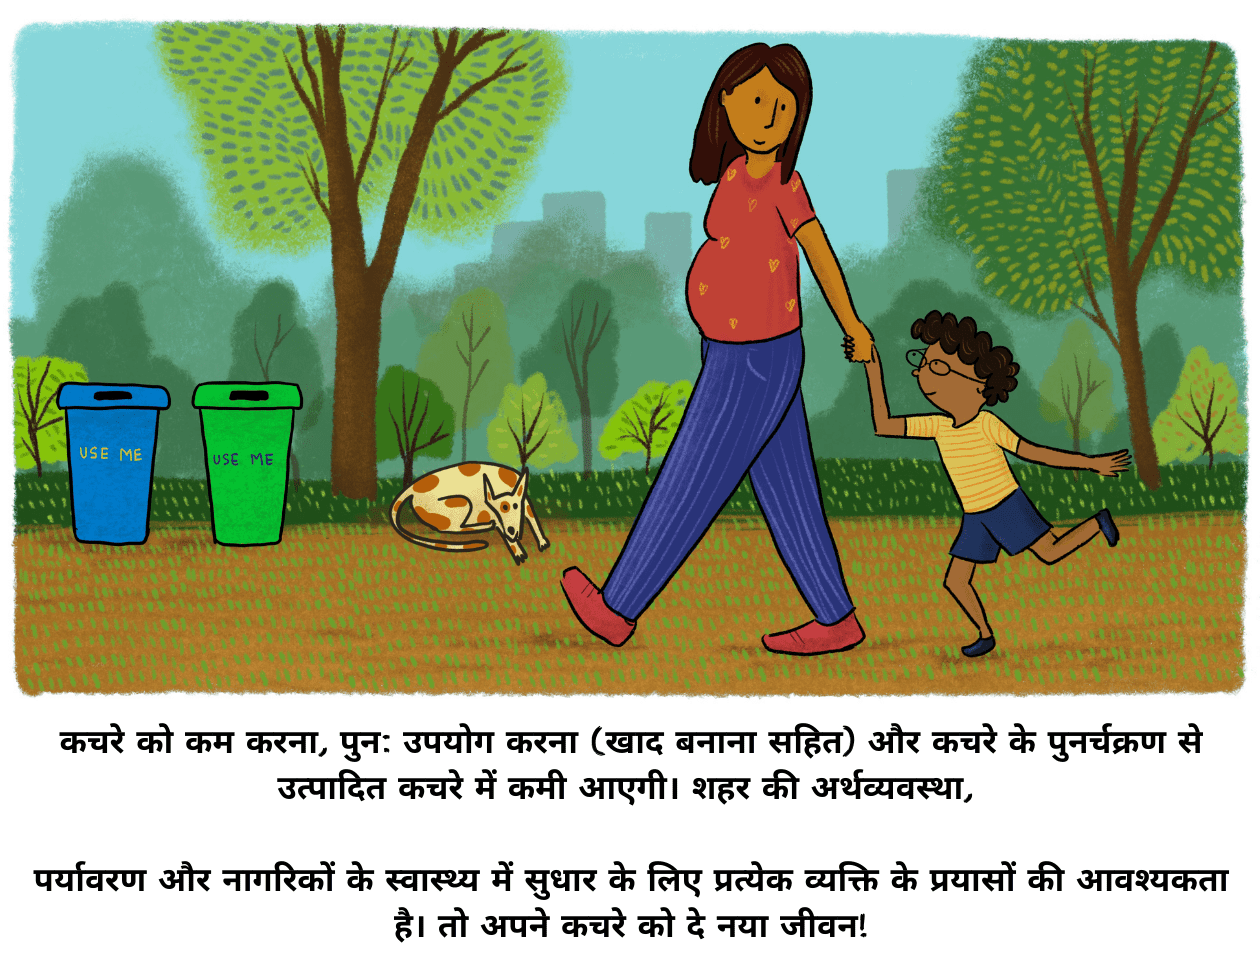 waste management essay in hindi